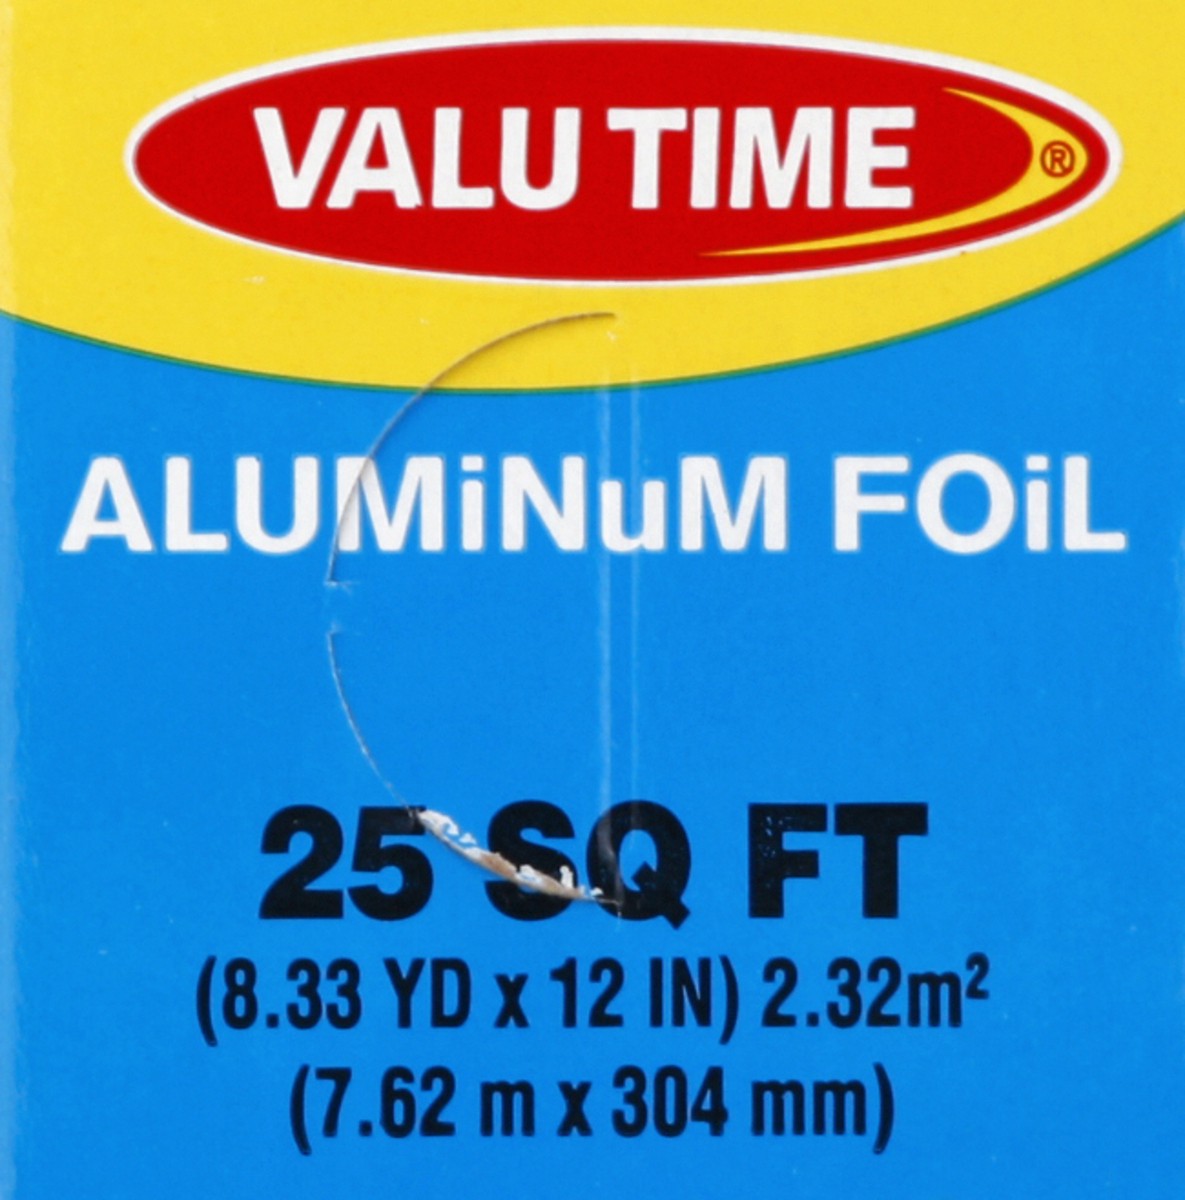 slide 3 of 6, Valu Time Aluminum Foil, 25 sq ft